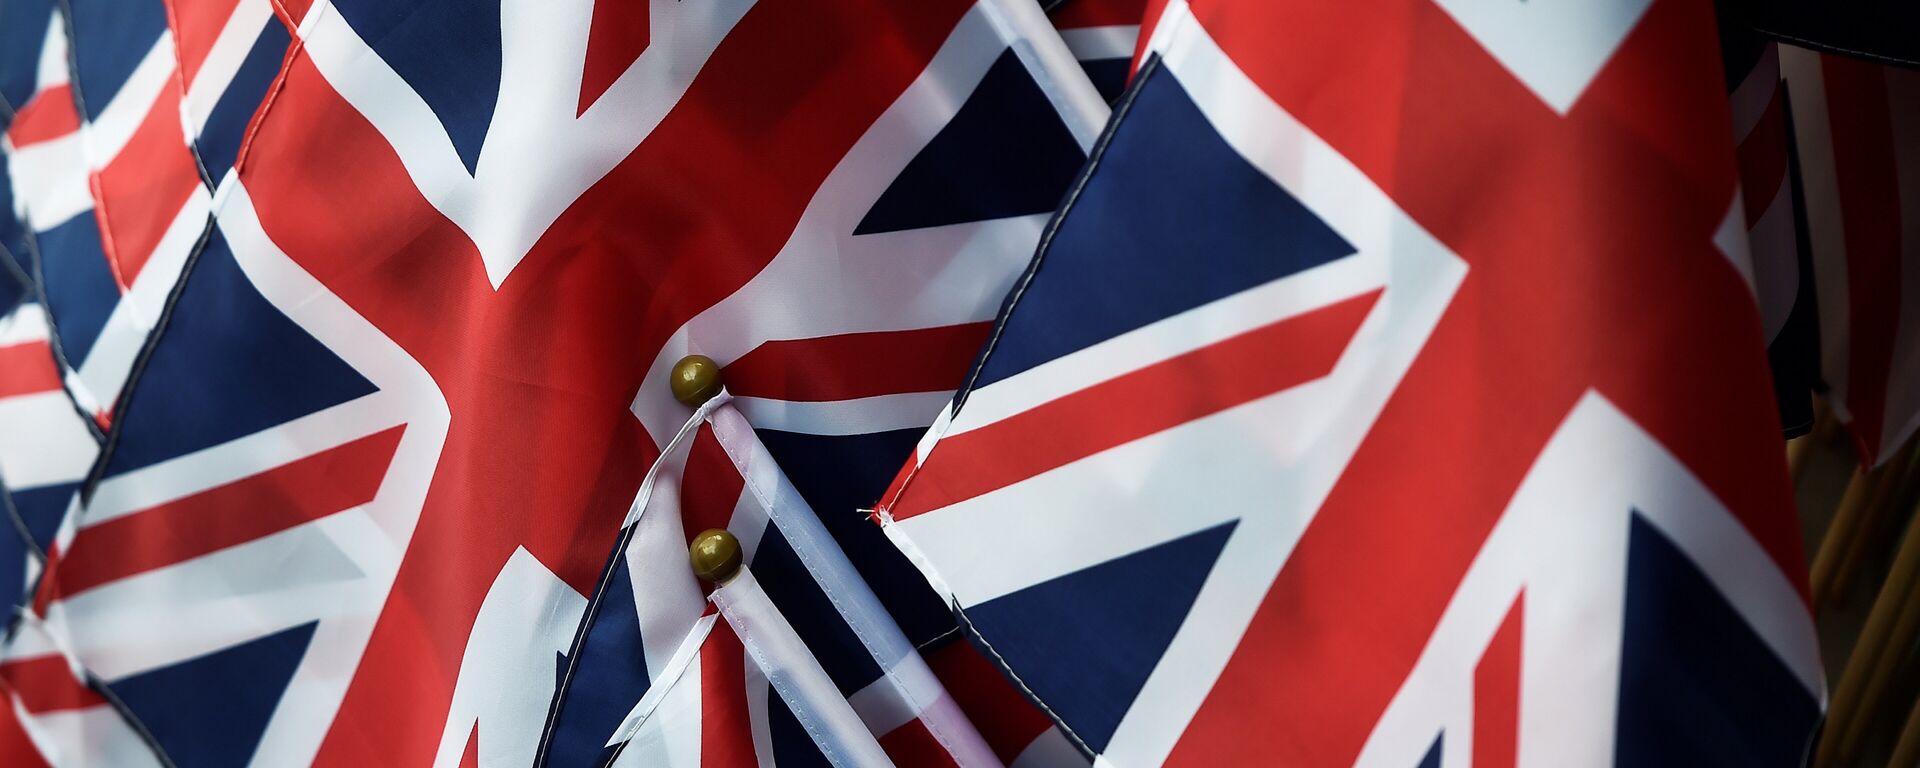 Las banderas del Reino Unido - Sputnik Mundo, 1920, 14.08.2021